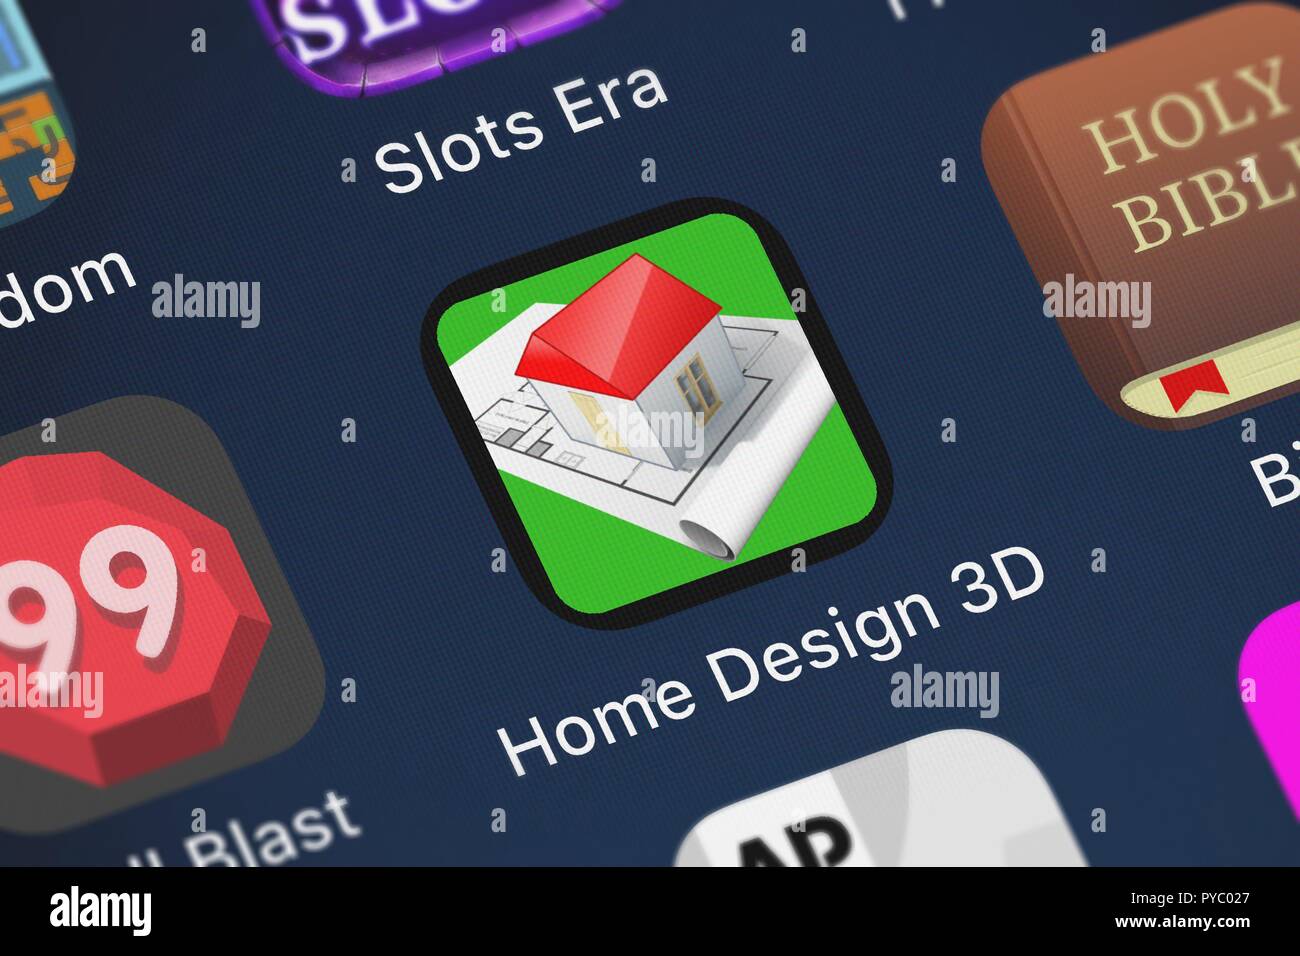 London, United Kingdom - October 26, 2018: Close-up shot of Anuman's popular app Home Design 3D. Stock Photo